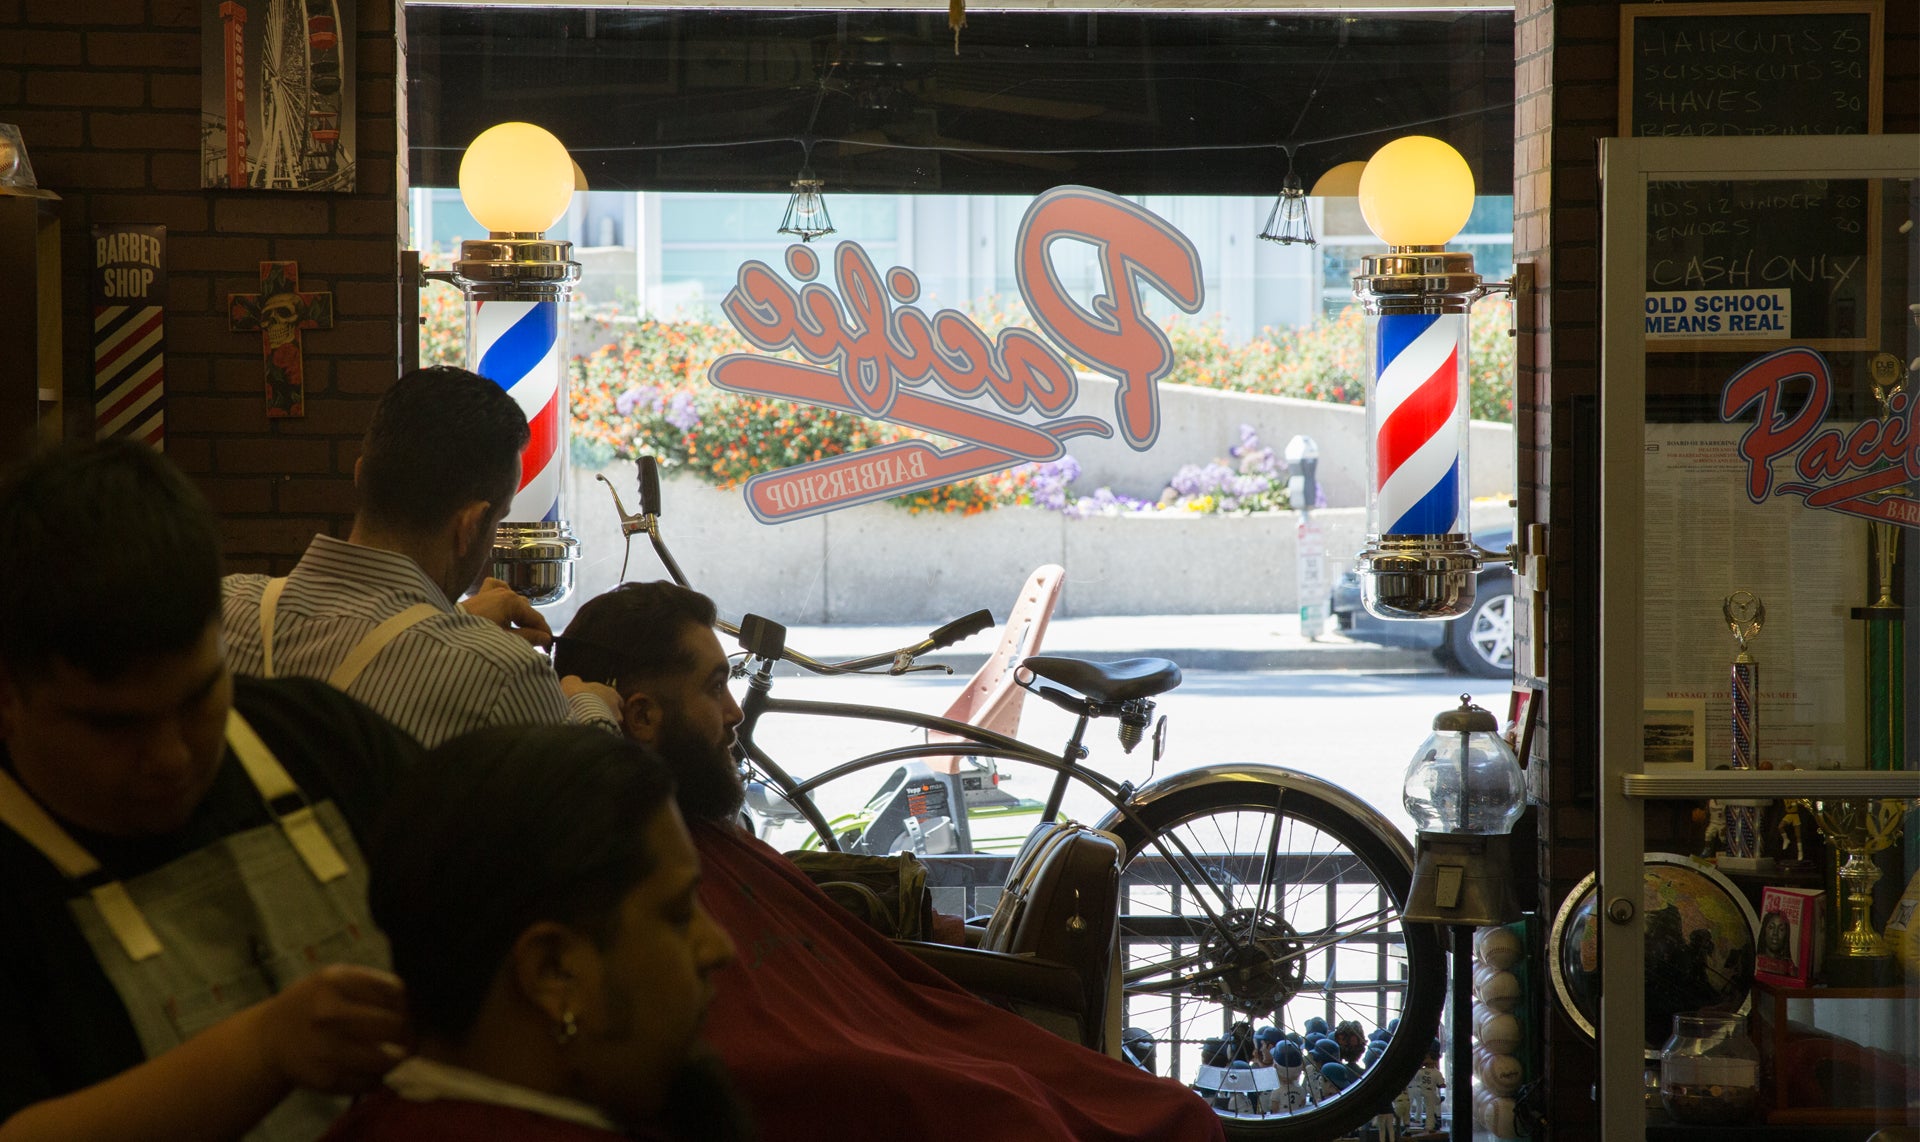 Haircuts And Shaves at Pacific Barbershop